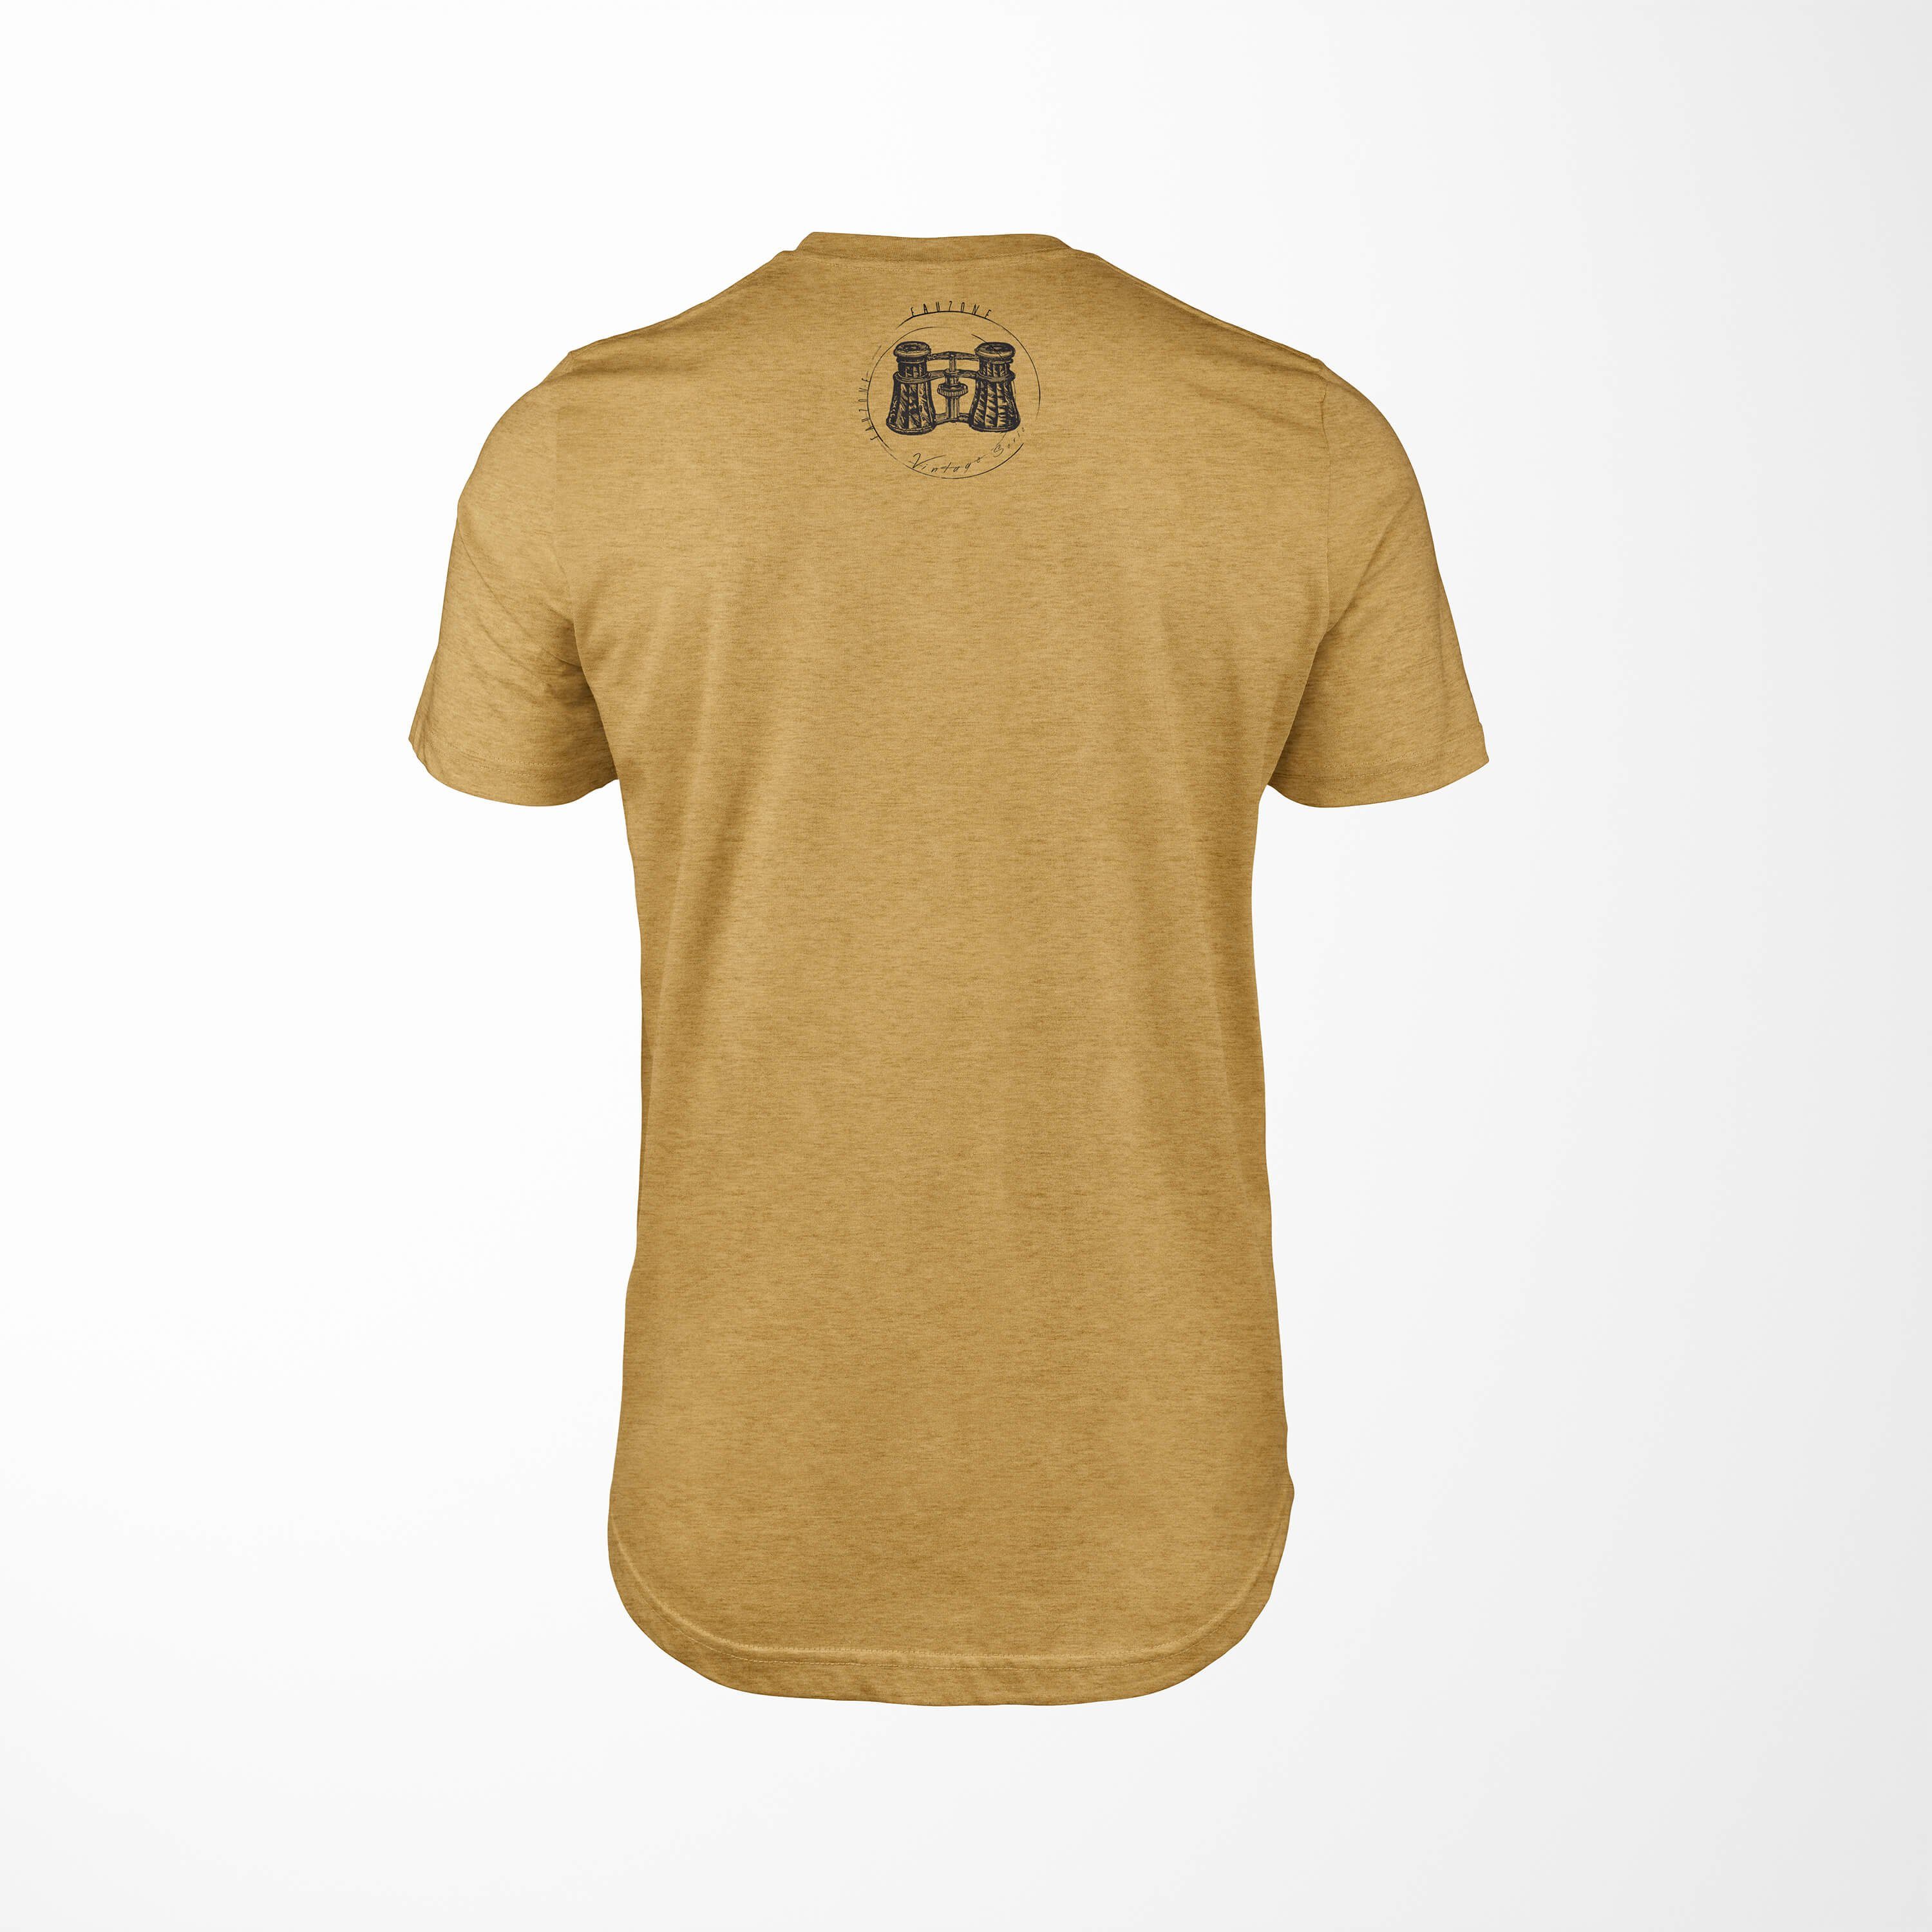 Sinus T-Shirt Vintage Antique Herren Gold Art Fernglas T-Shirt